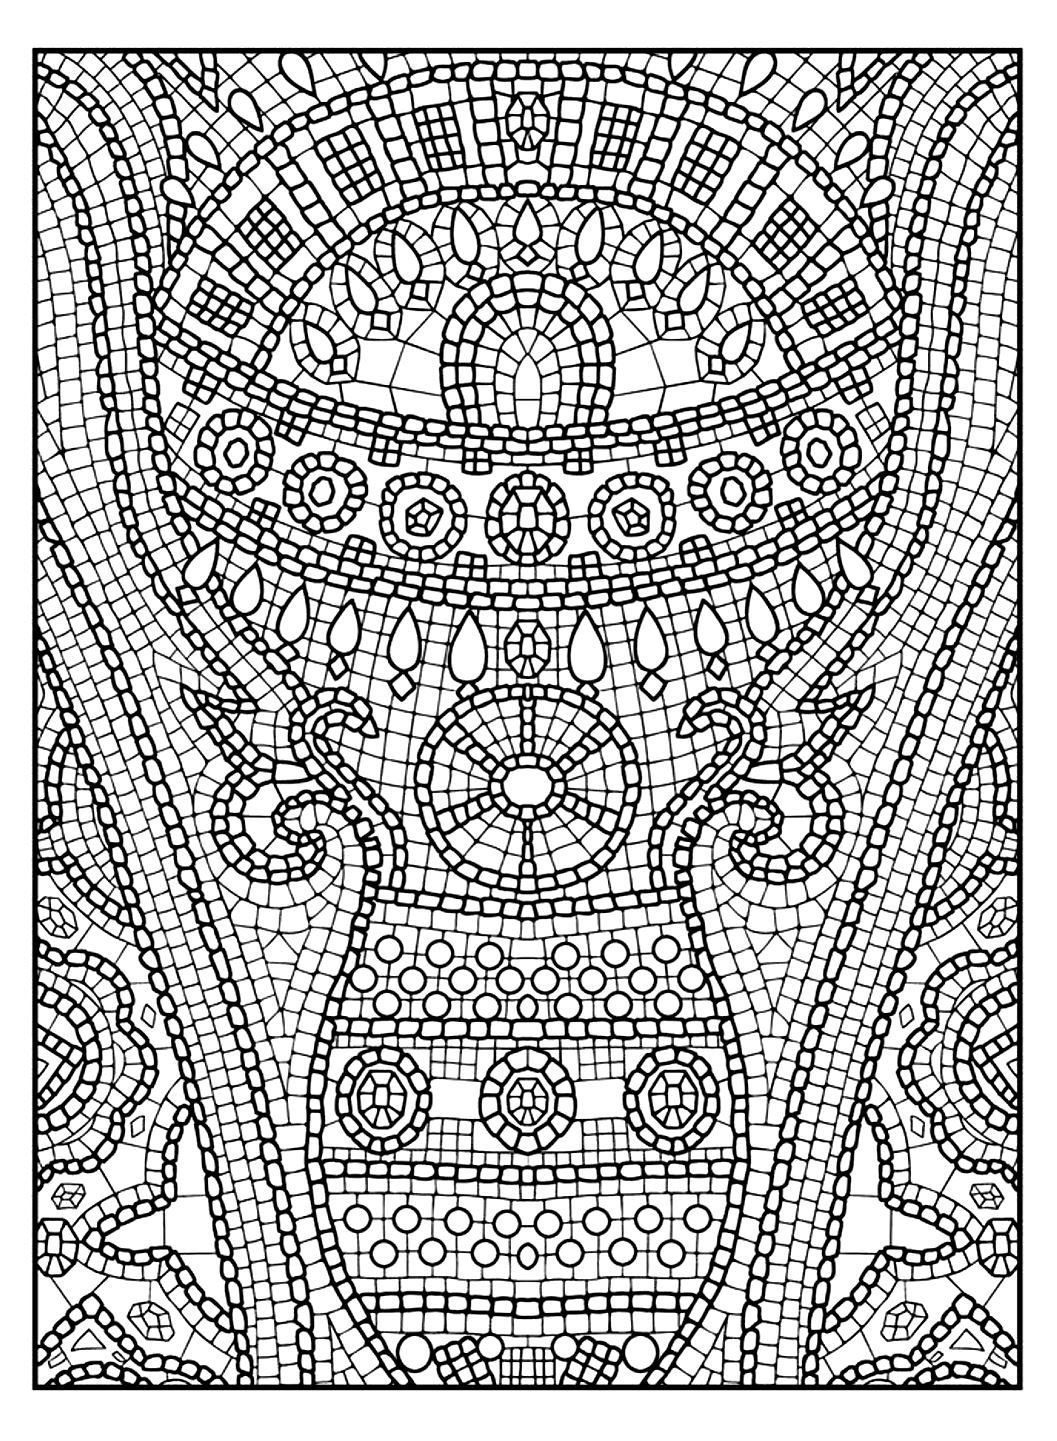 Zen anti stress to print 11 - Image with : Calm down, Mosaic